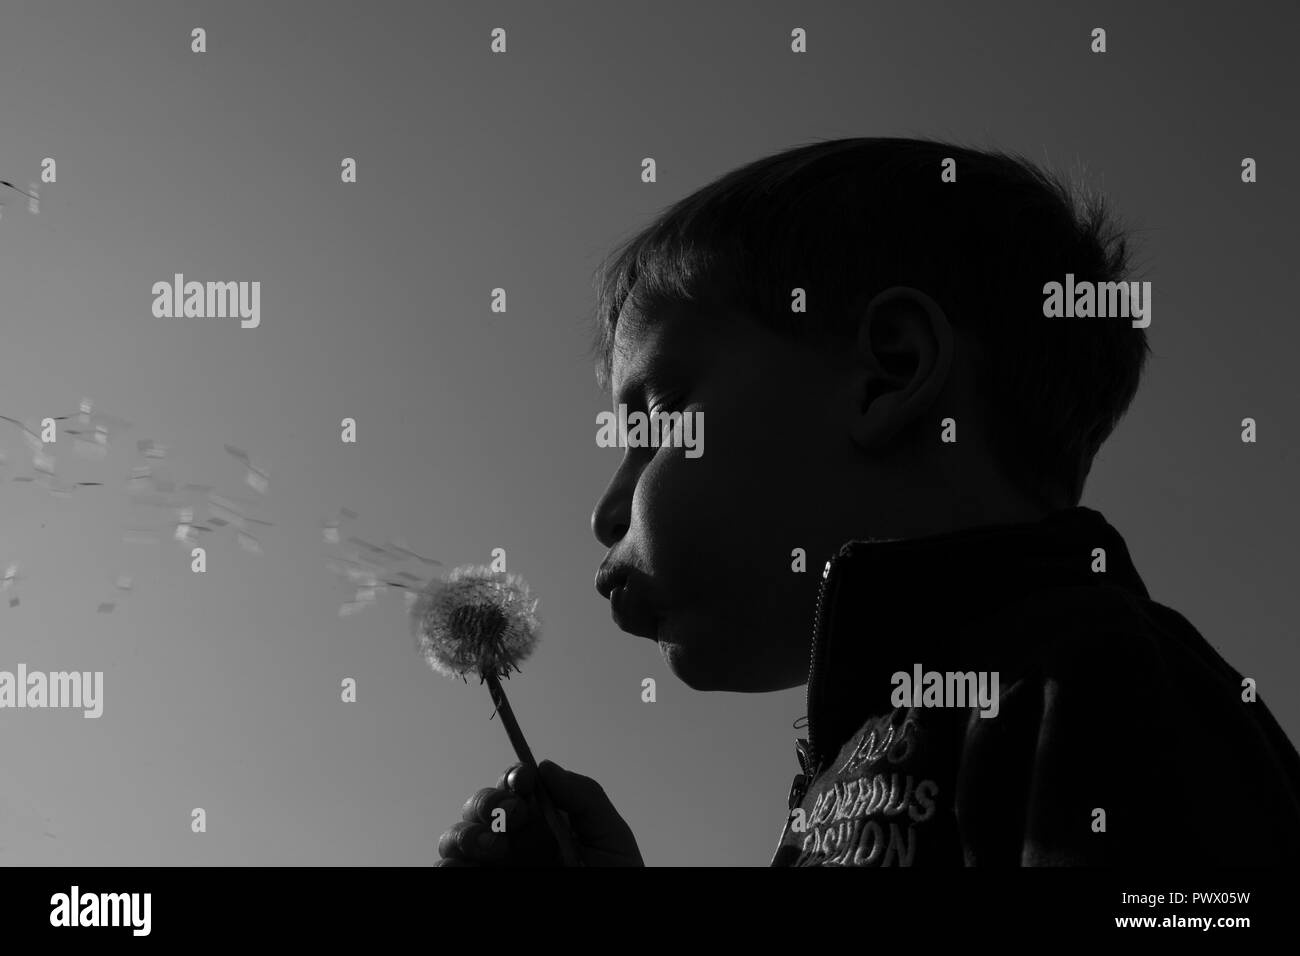 Boy blowing a dandelion clock Stock Photo